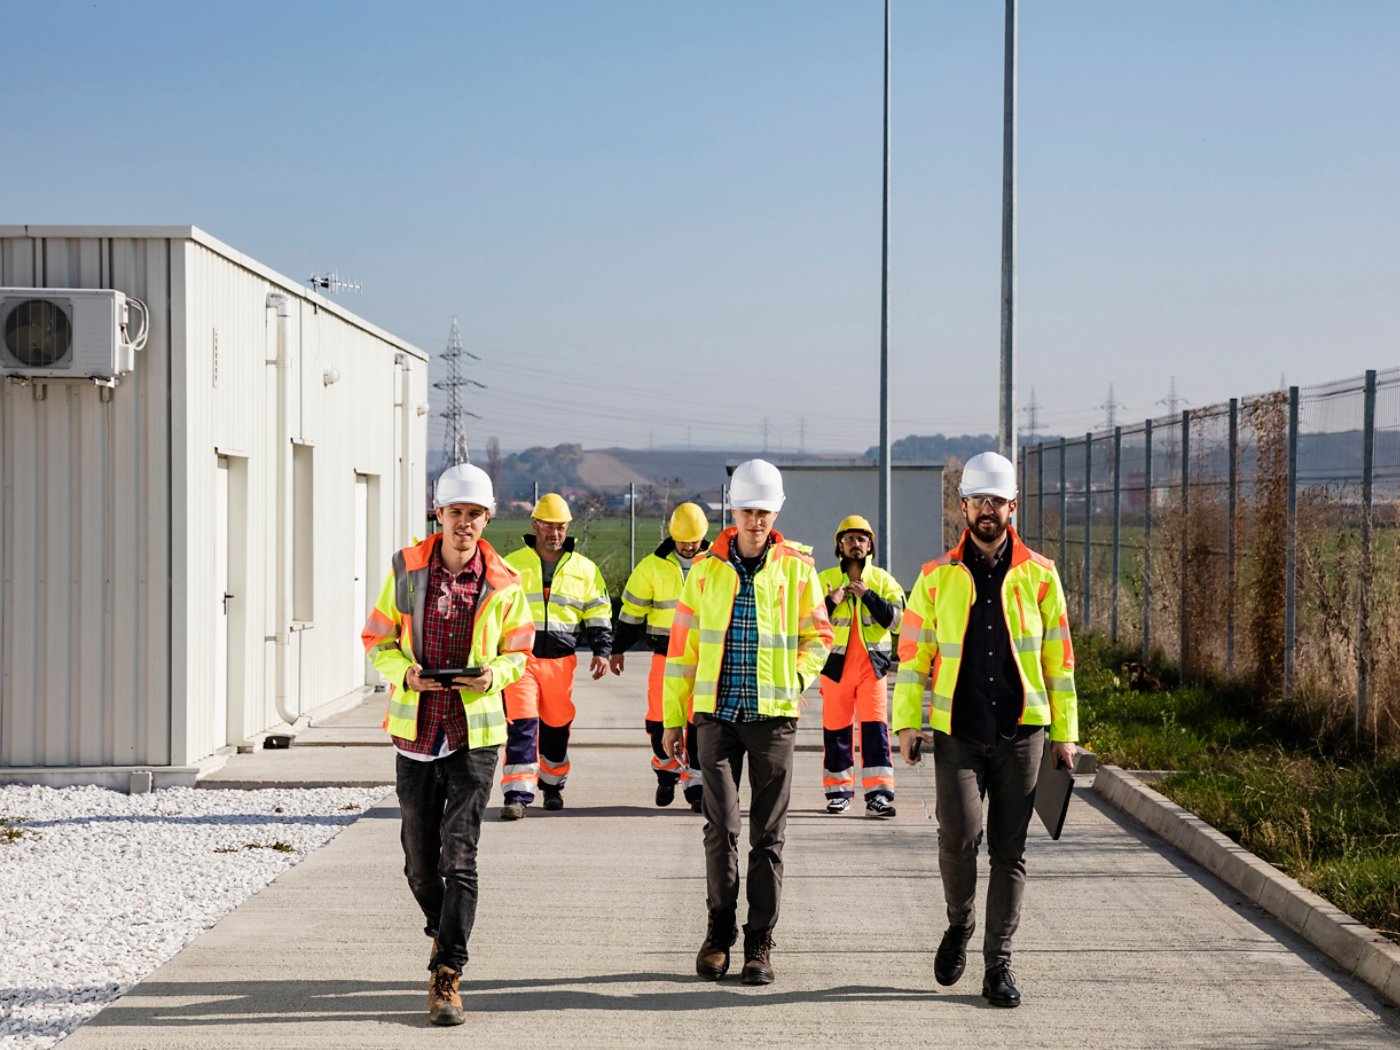 Engineers and workers walking down industrial plant